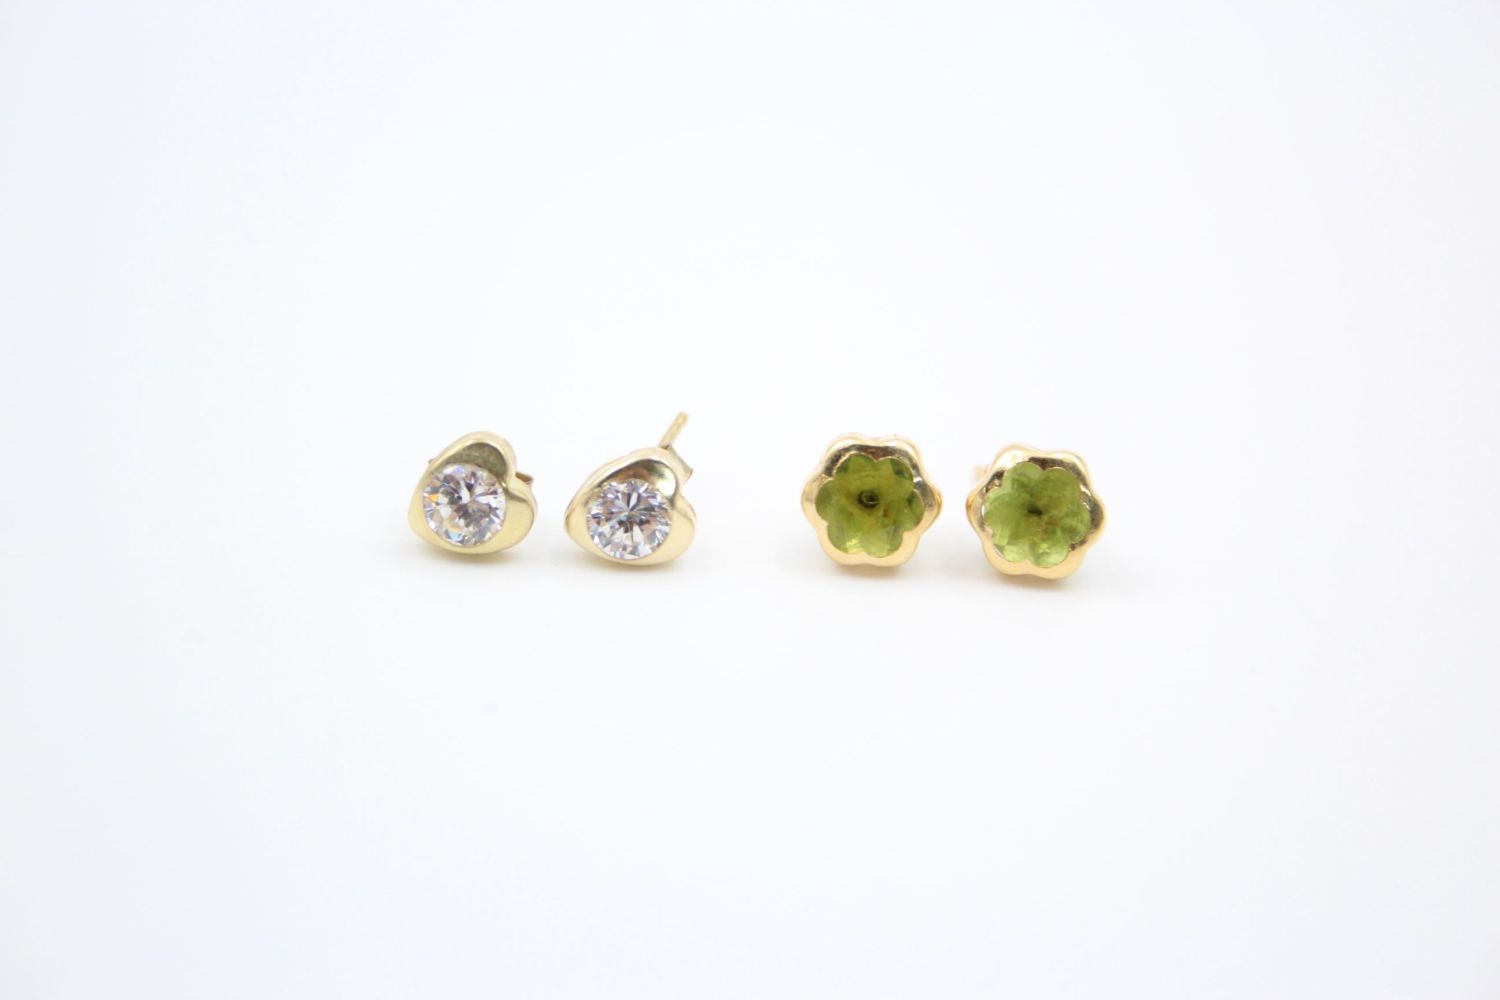 2 x 9ct gold gemstone stud earrings 1.6 grams gross